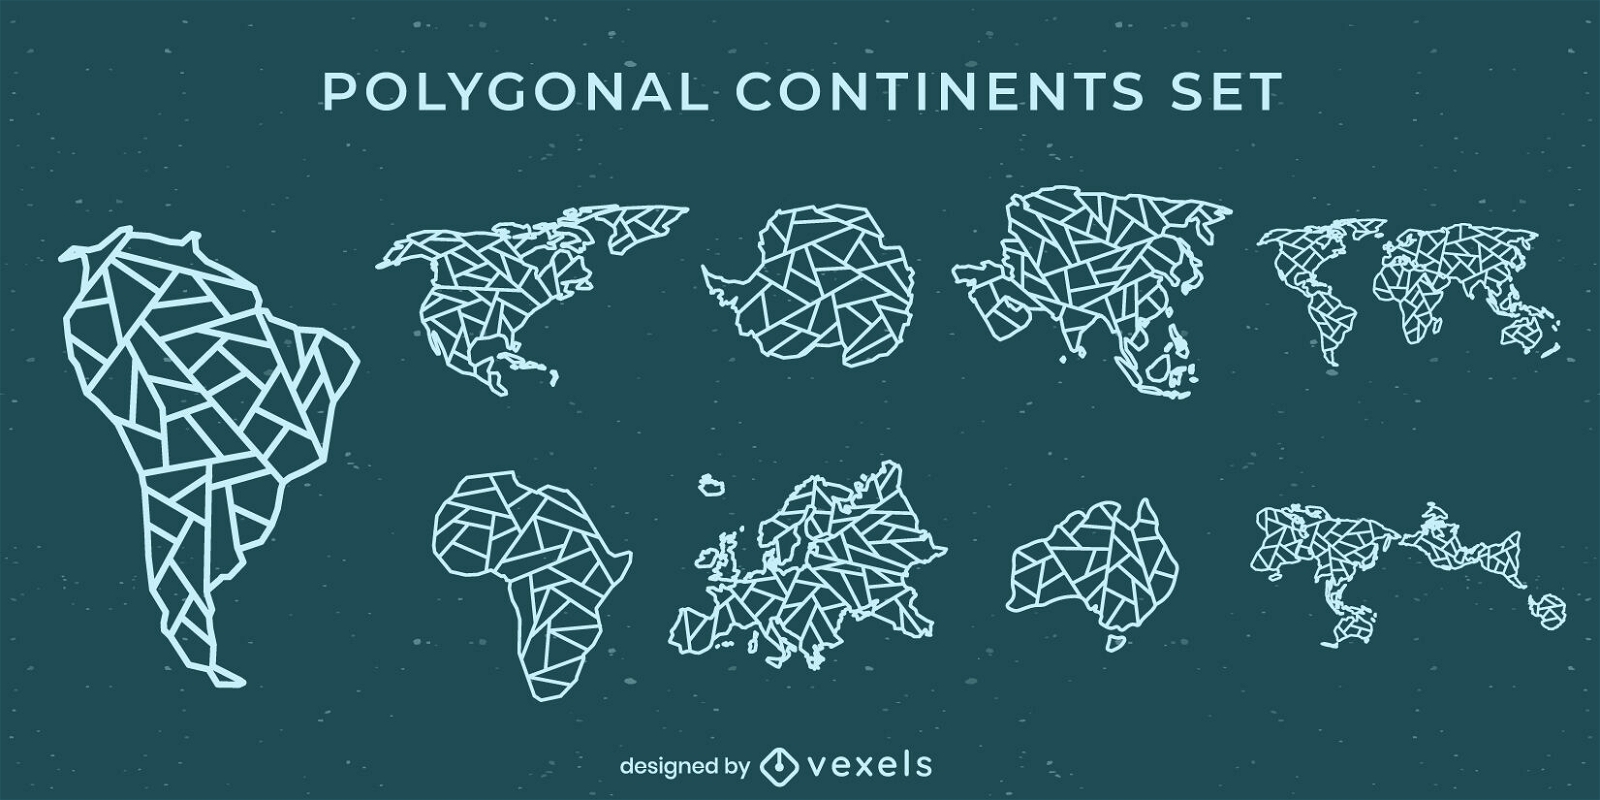 Cool polygonal continents set